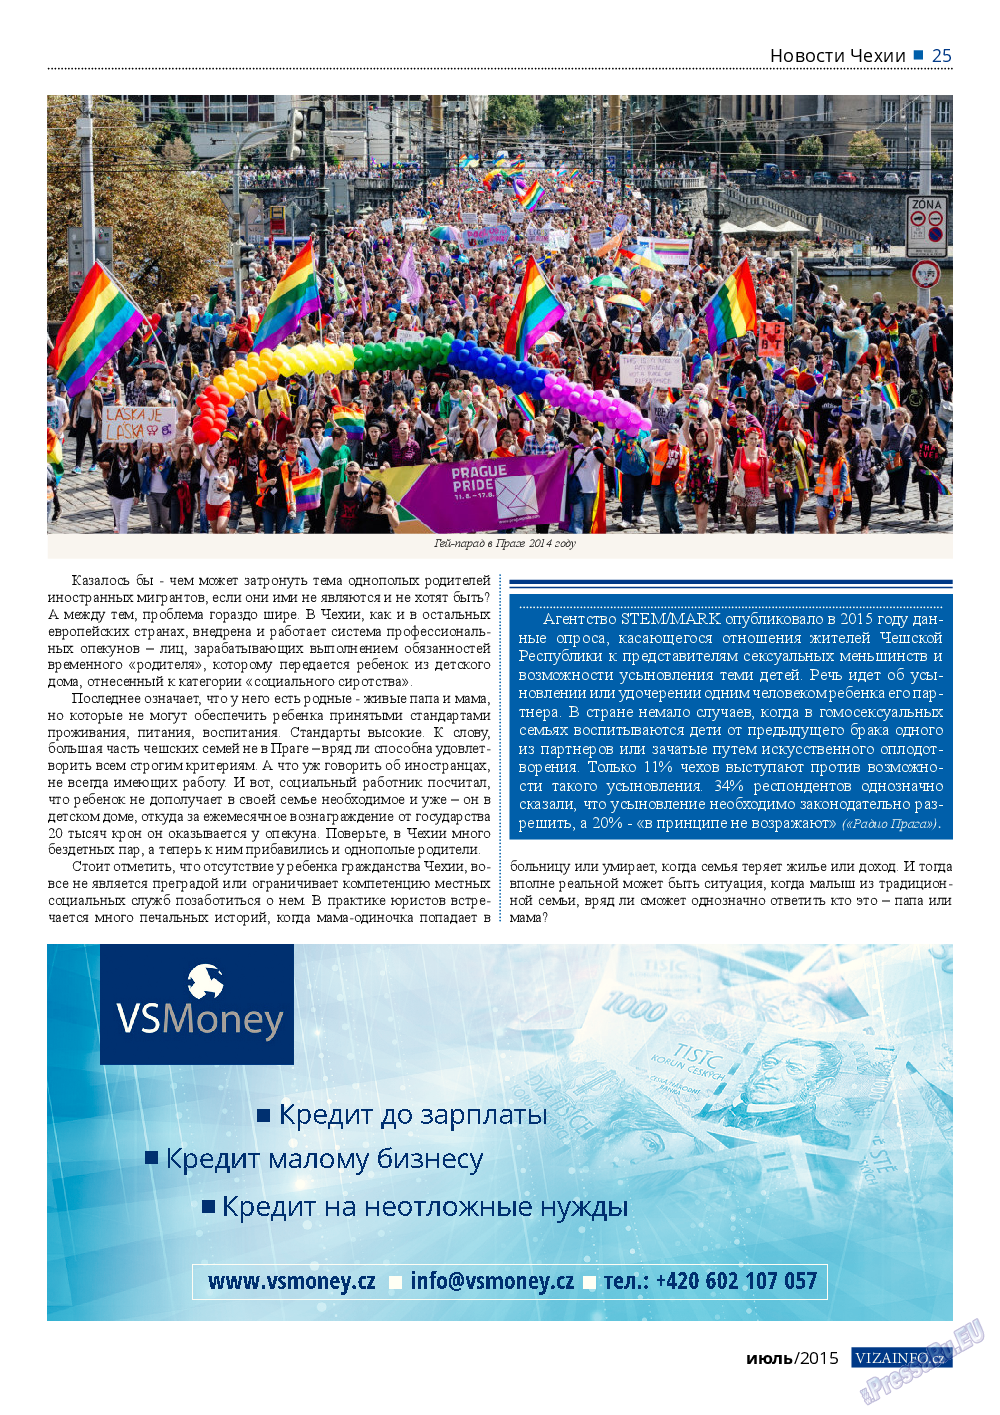 Vizainfo.cz (газета). 2015 год, номер 70, стр. 25